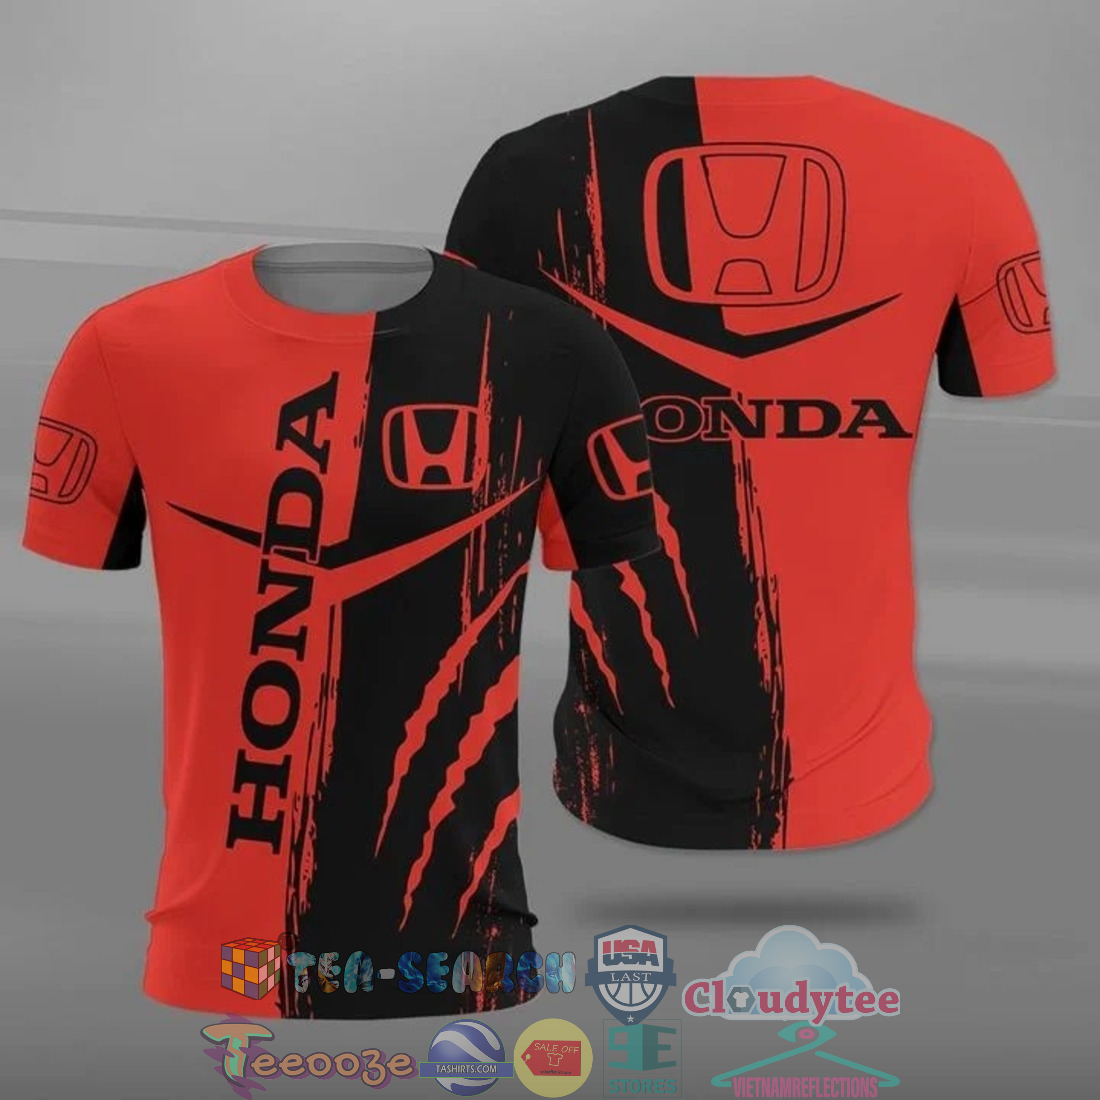 Honda ver 3 all over printed t-shirt hoodie